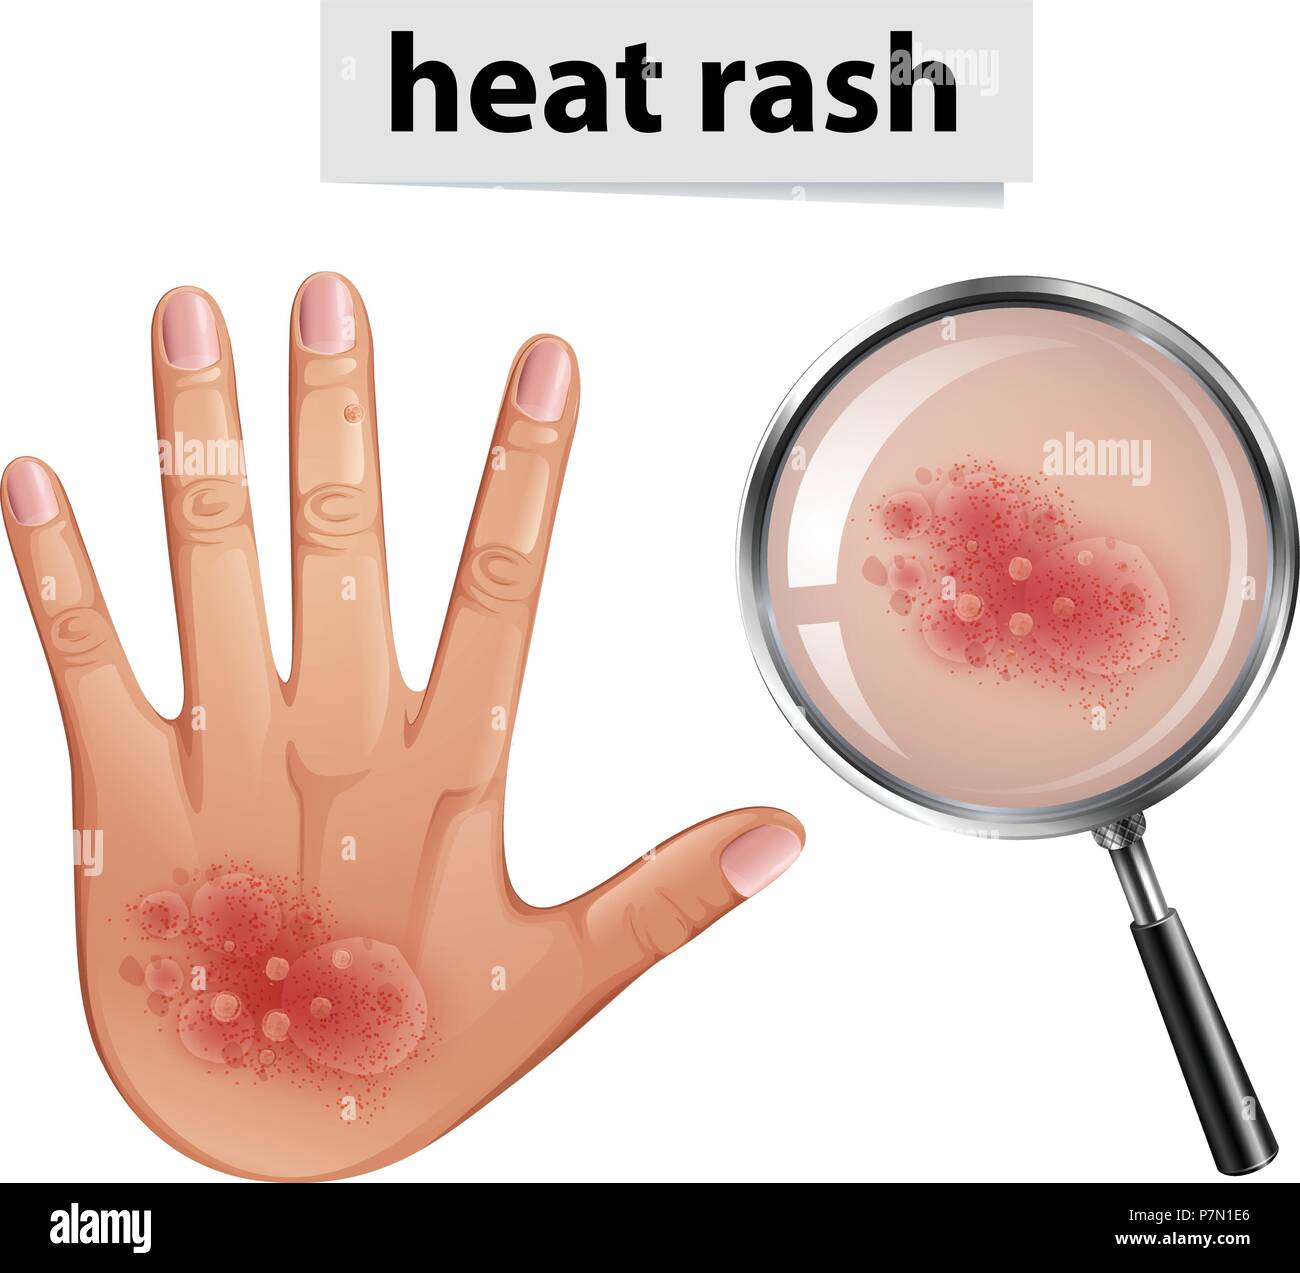 Human Hand with Heat Rash illustration Stock Vector